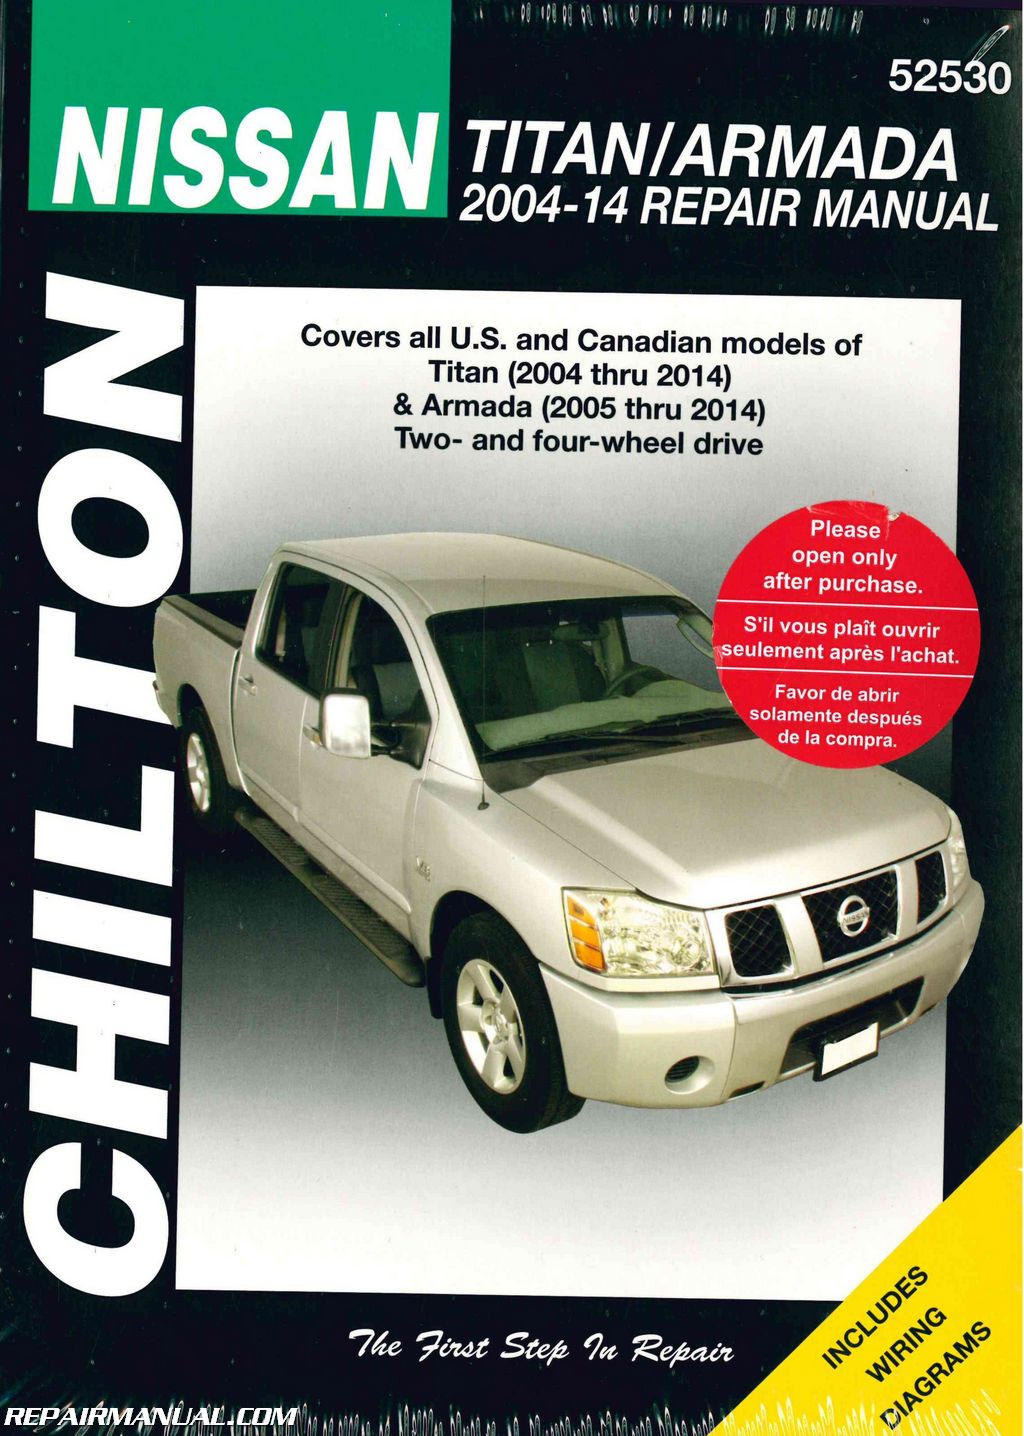 Chilton auto repair manual nissan #2